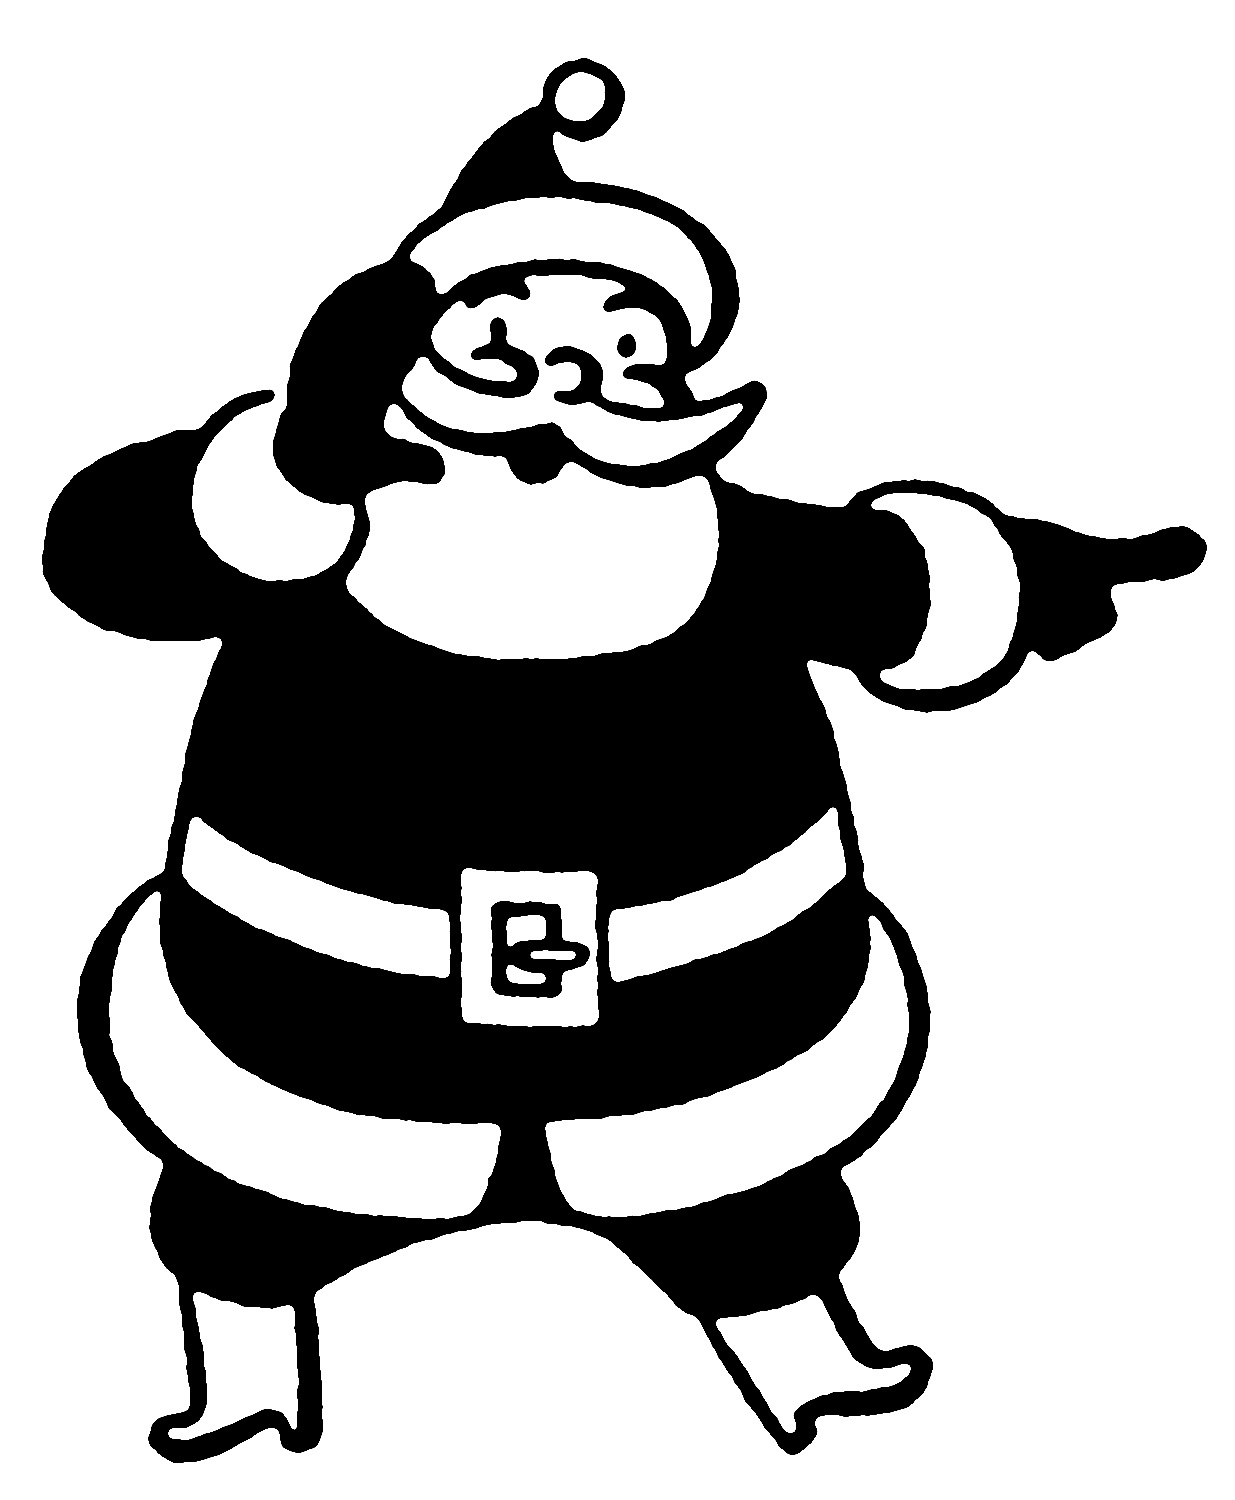 Retro Christmas Clip Art - Funny Santas - The Graphics Fairy